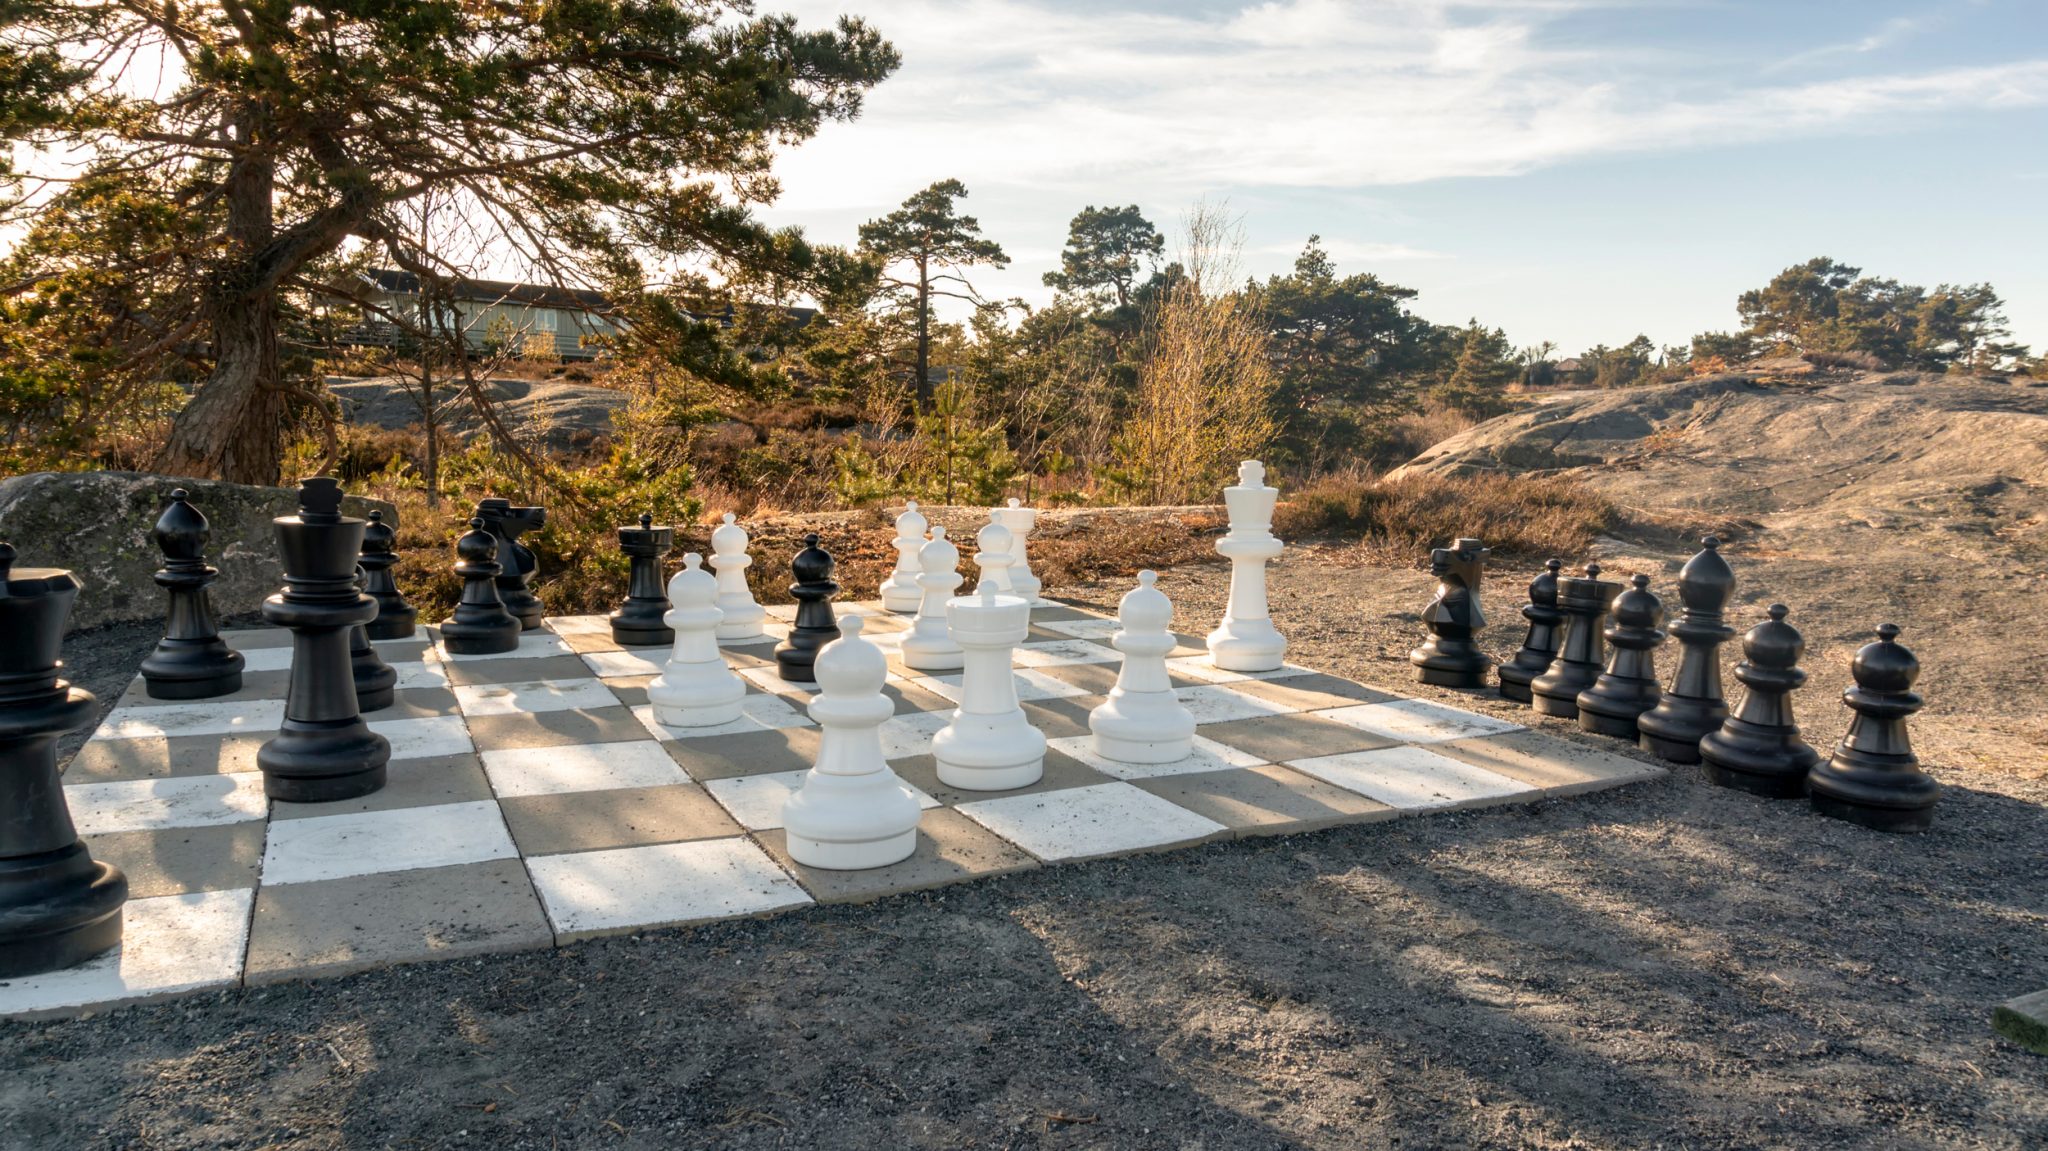 hardscape ideas chessboard